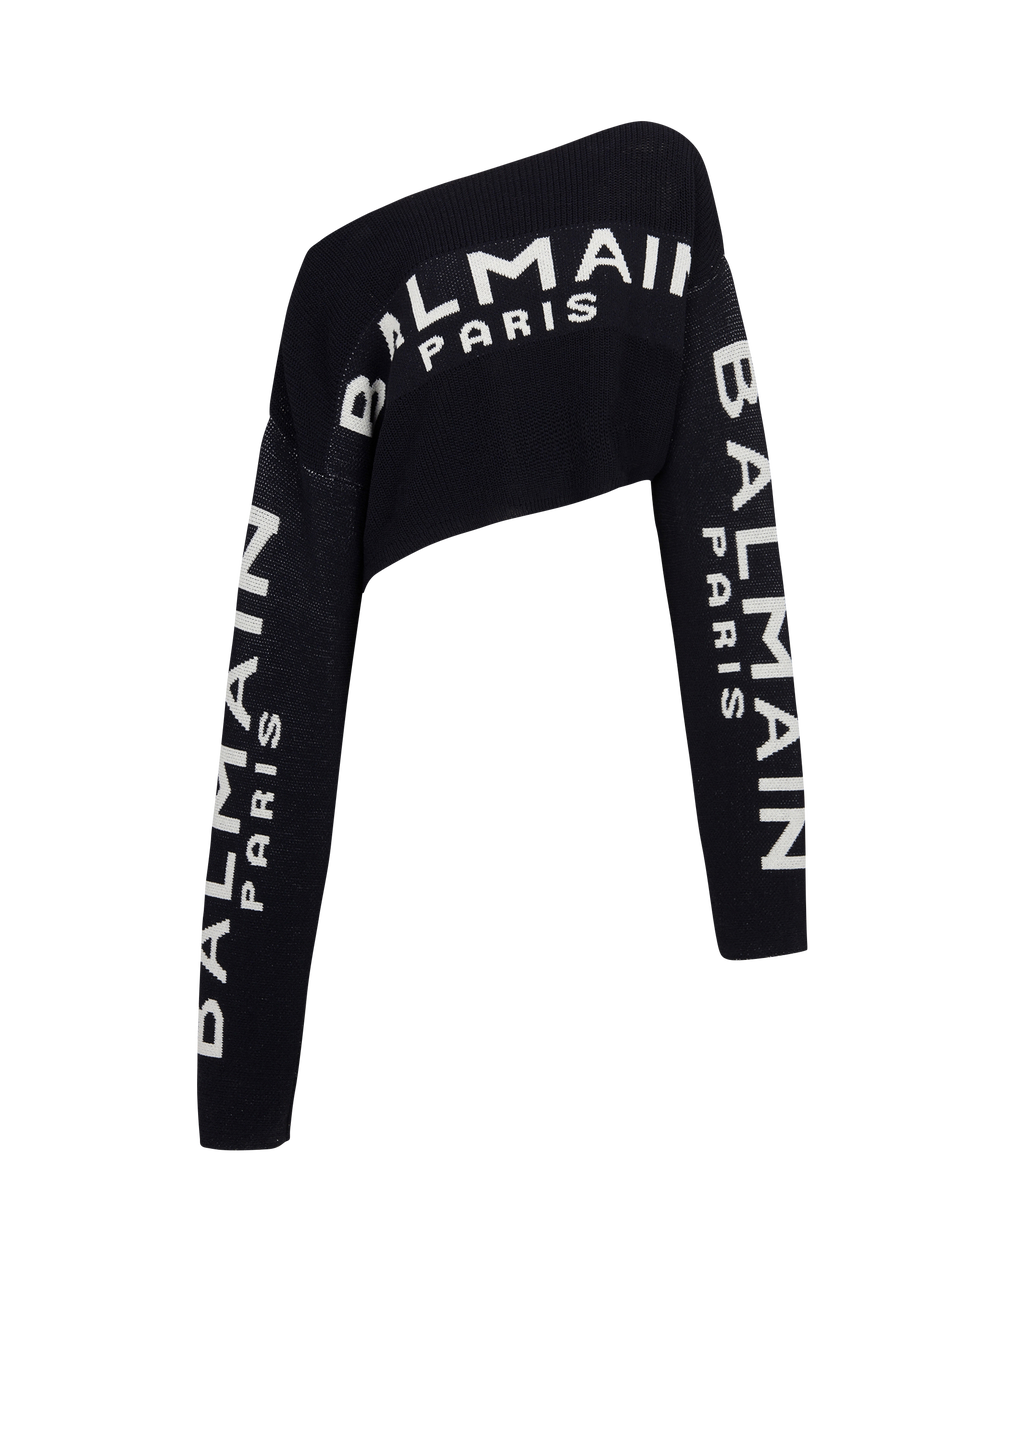 Cropped knit sweater with graffiti Balmain logo print, black, hi-res